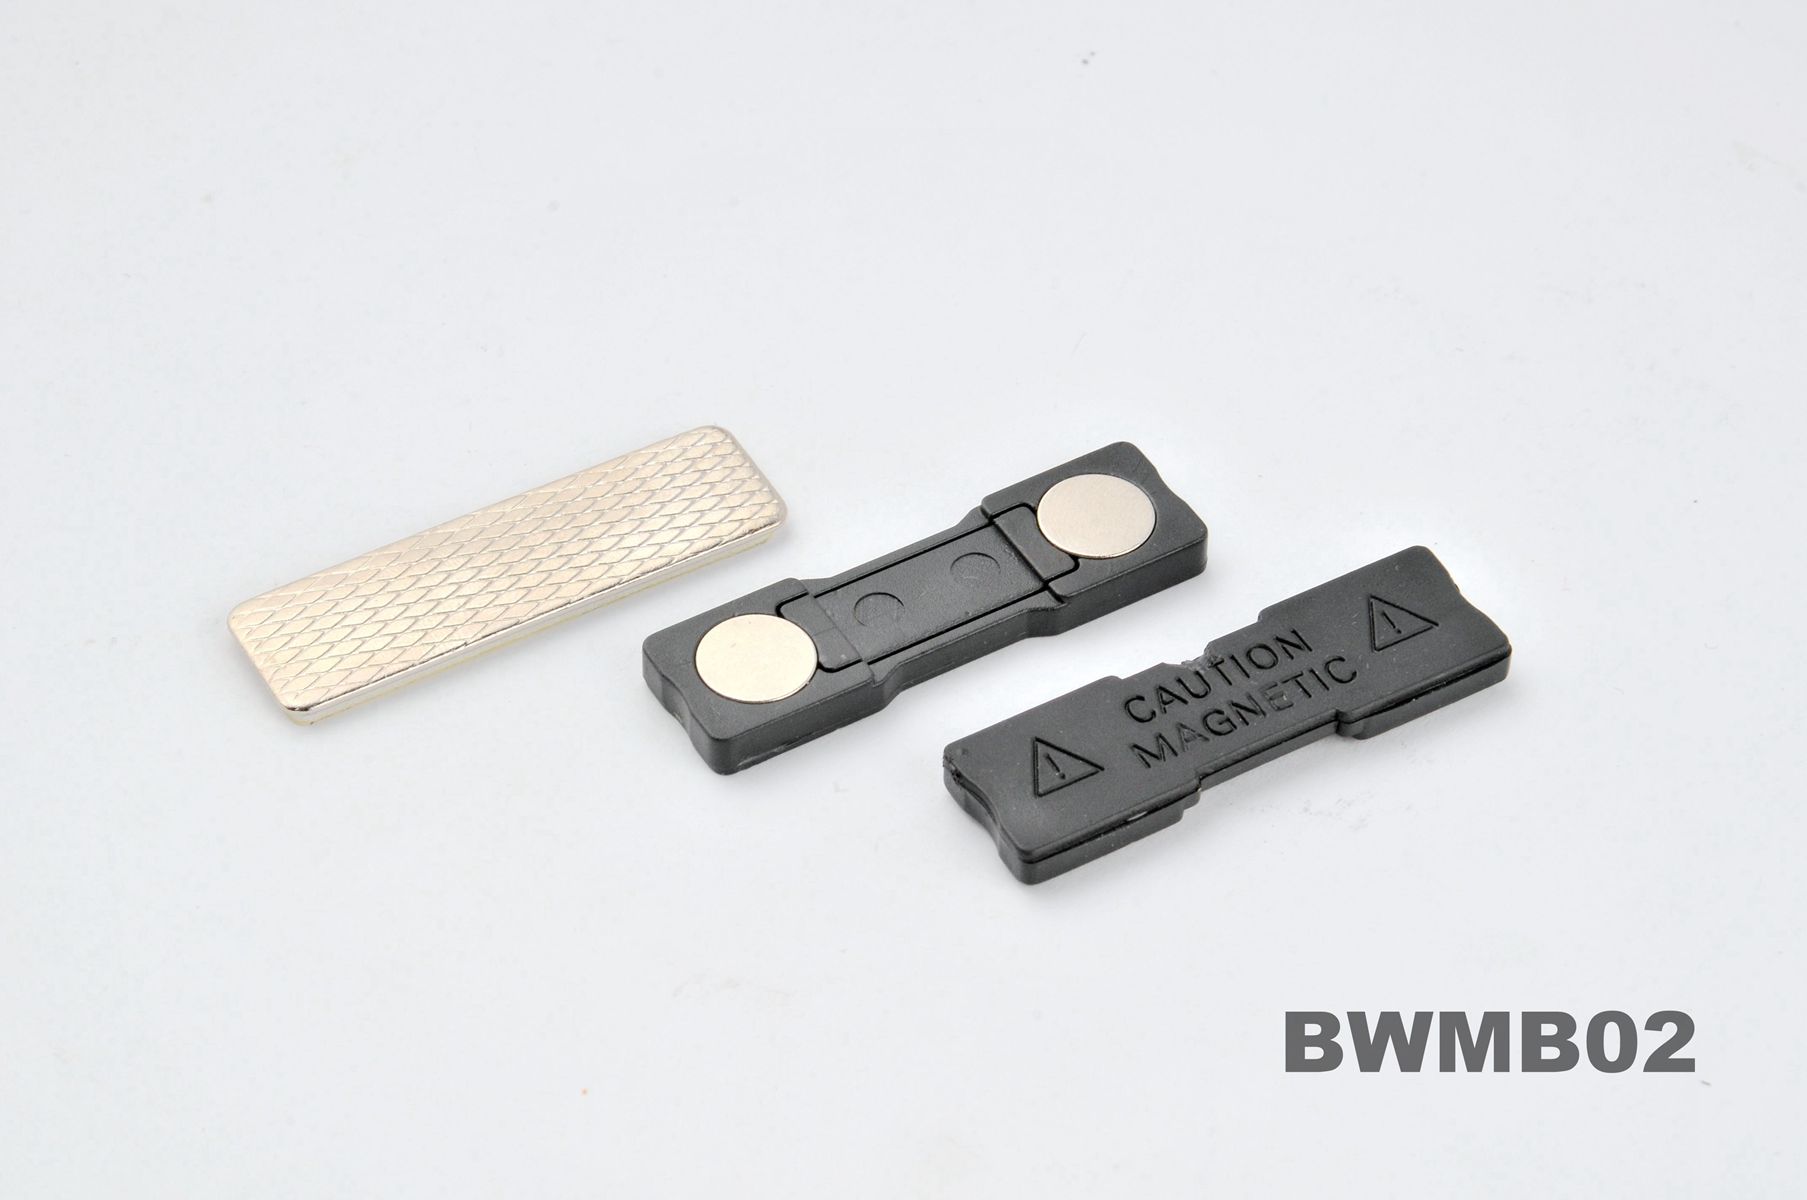 BWMB01 Magnetic Name Badge Holder